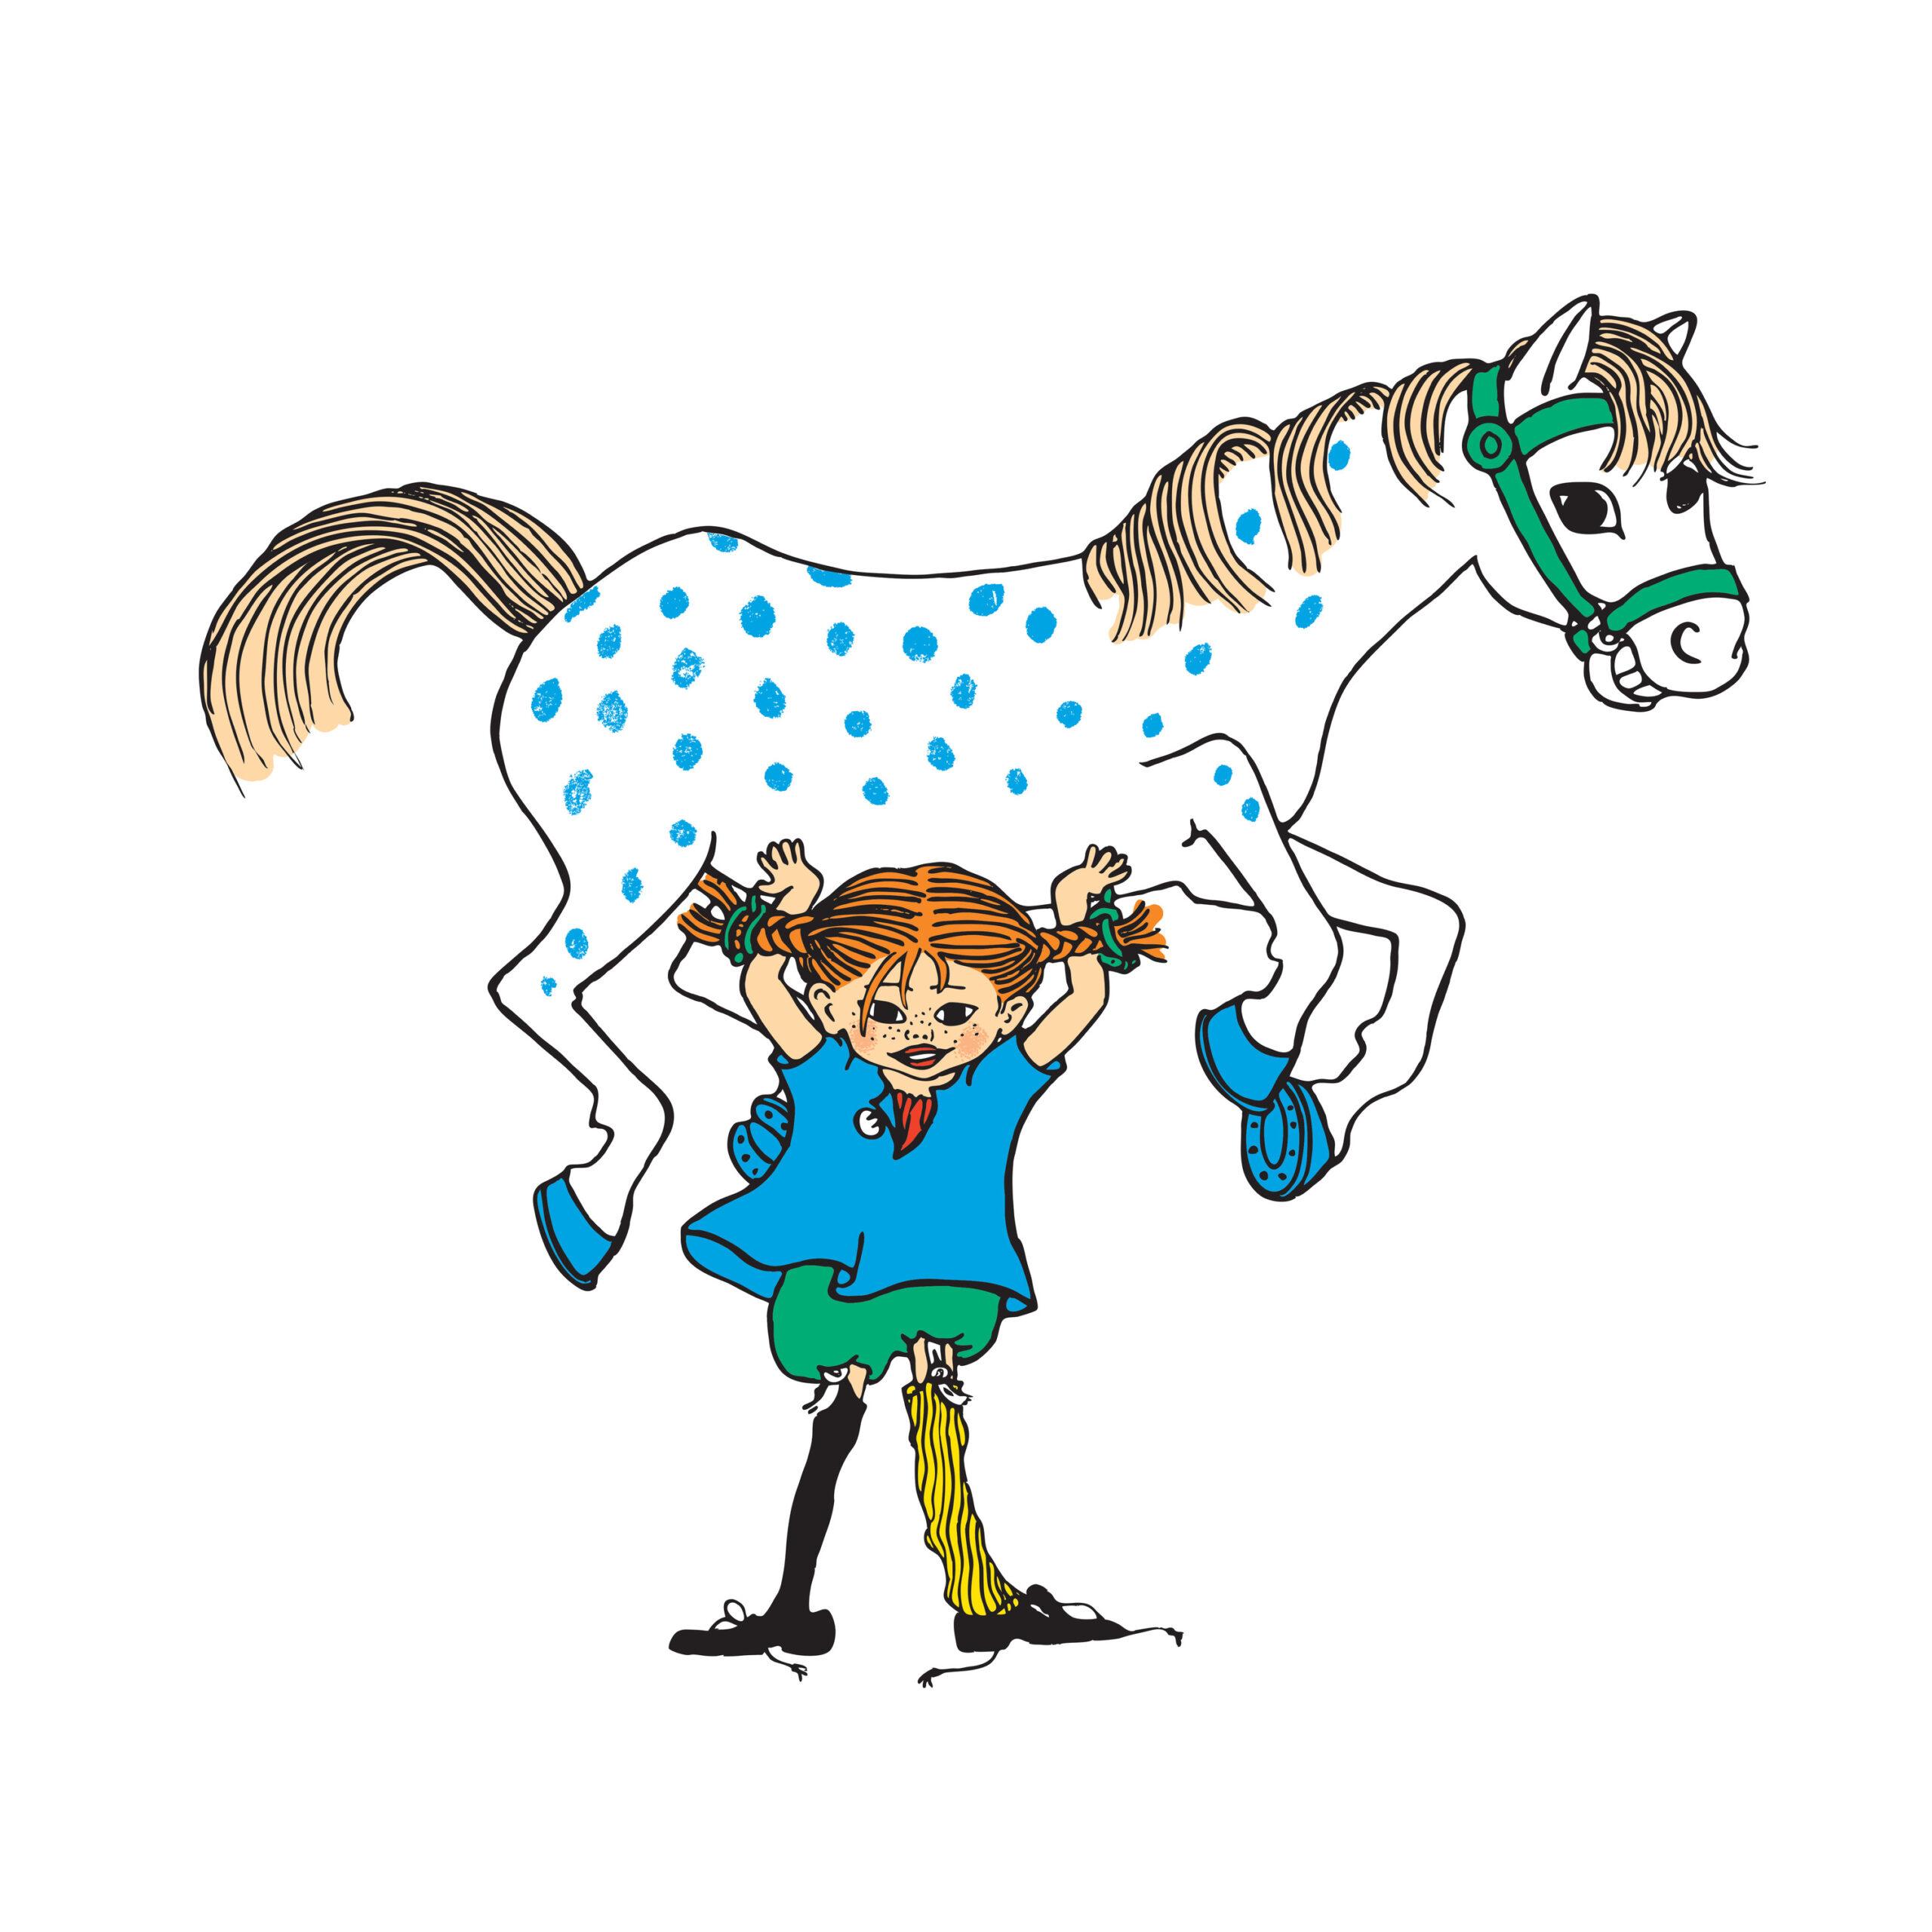 Illustration of Pippi Longstocking lifting a horse.